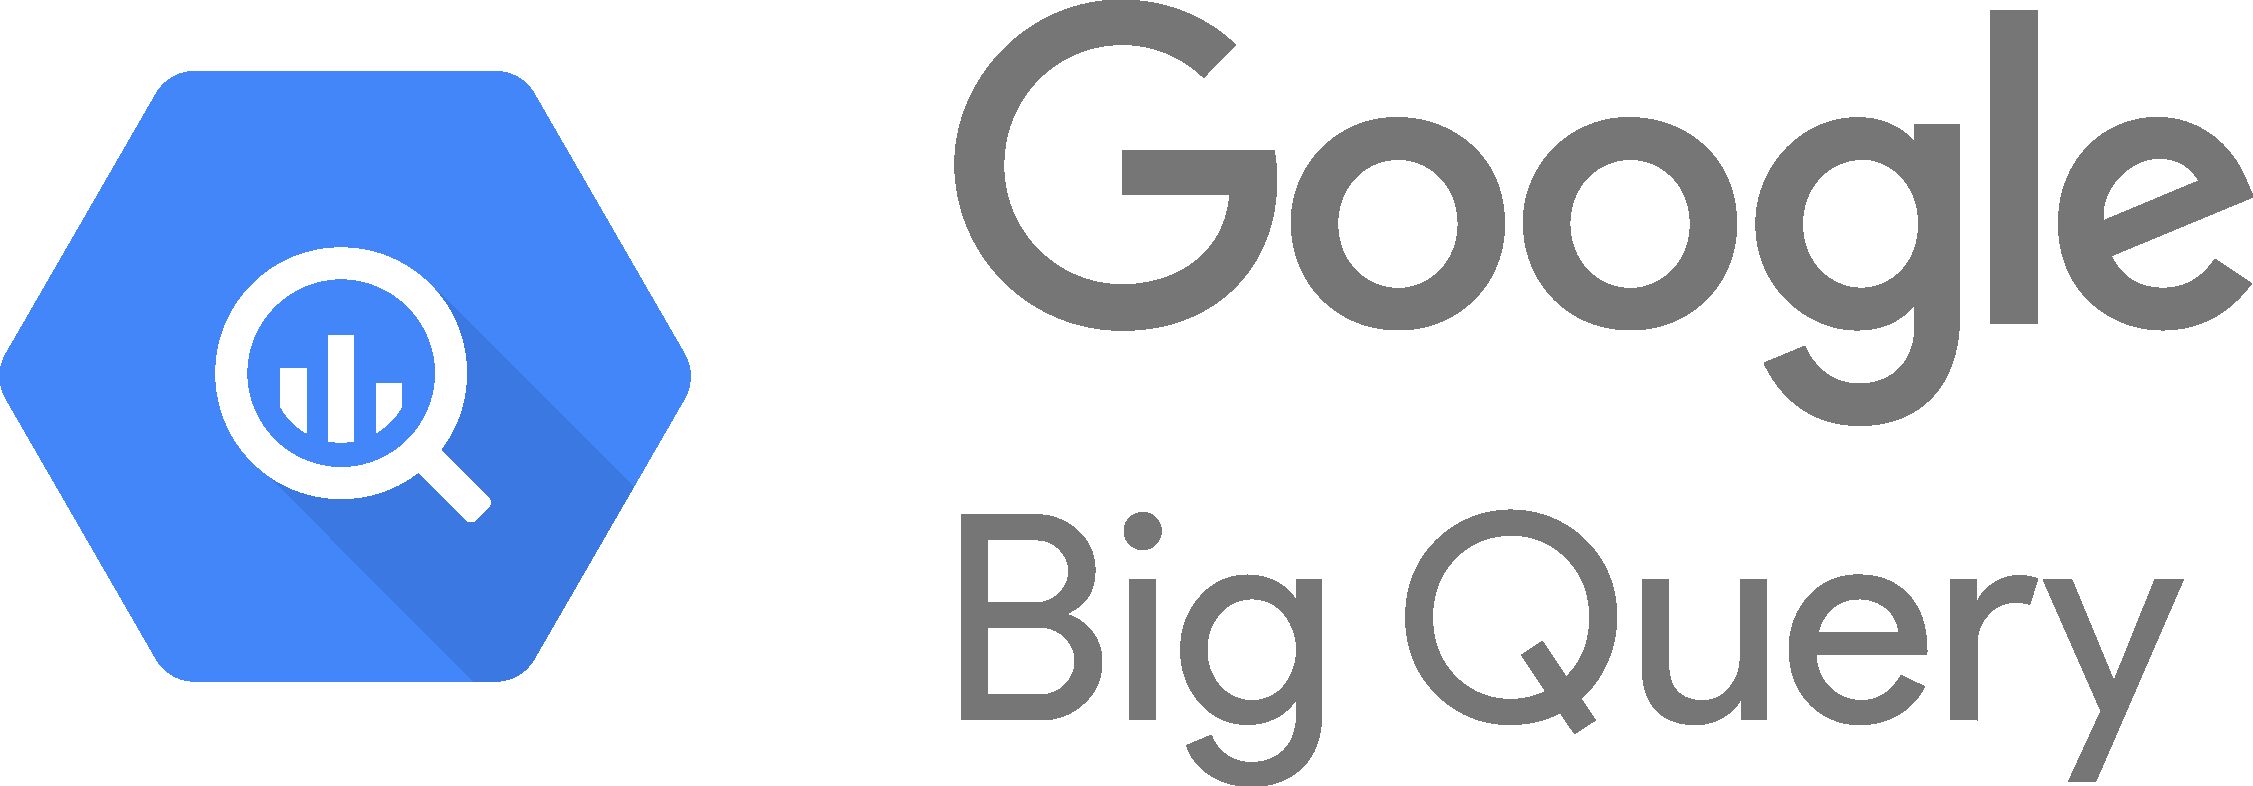 bigquery_logo